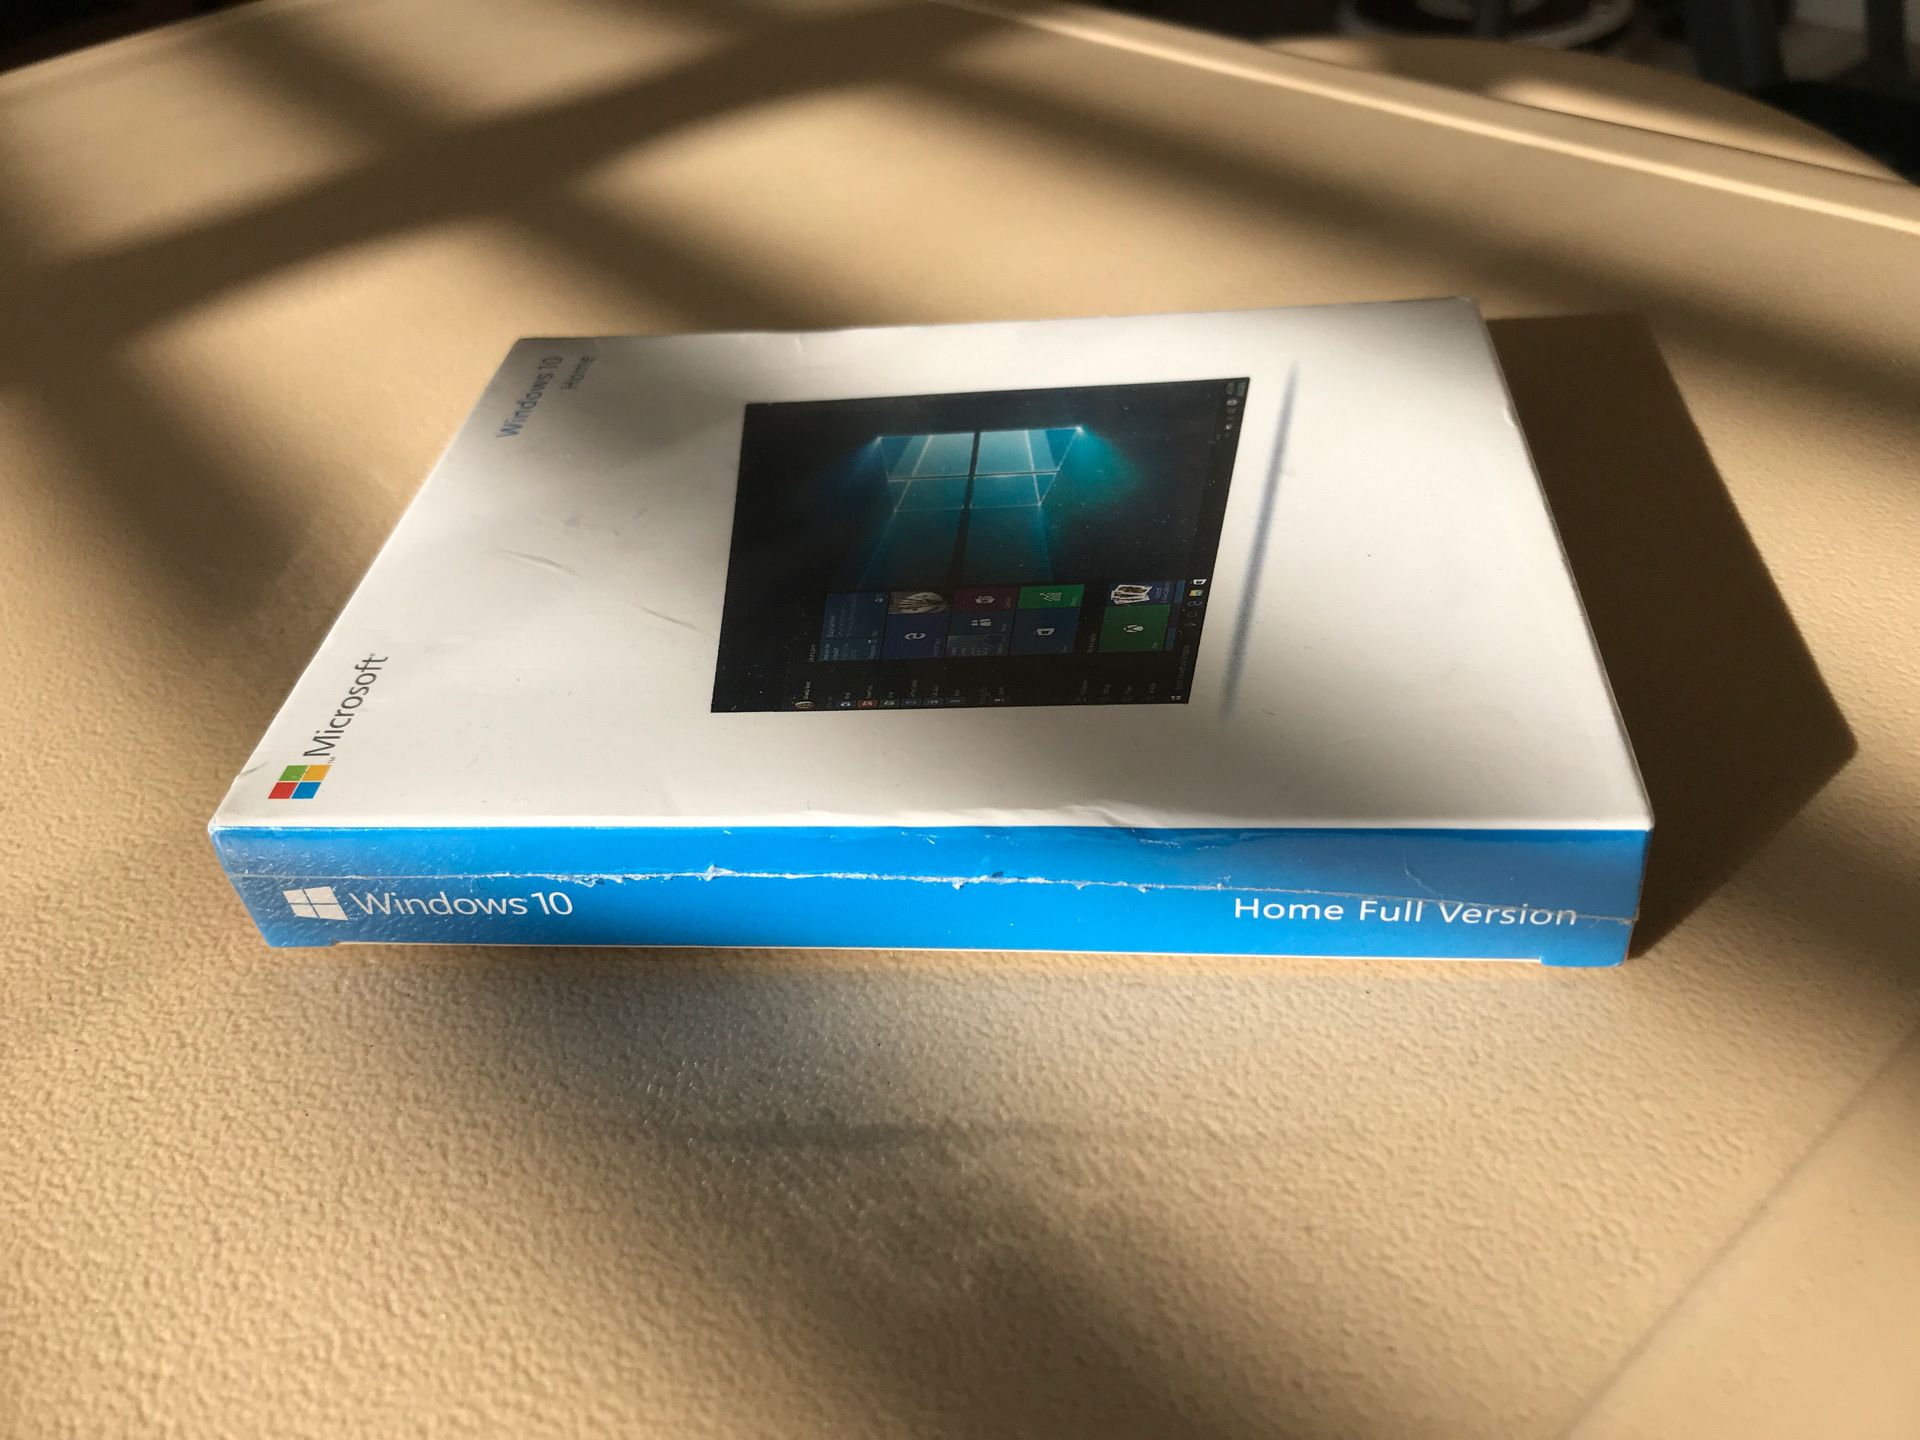 Windows 10 Home Full Version